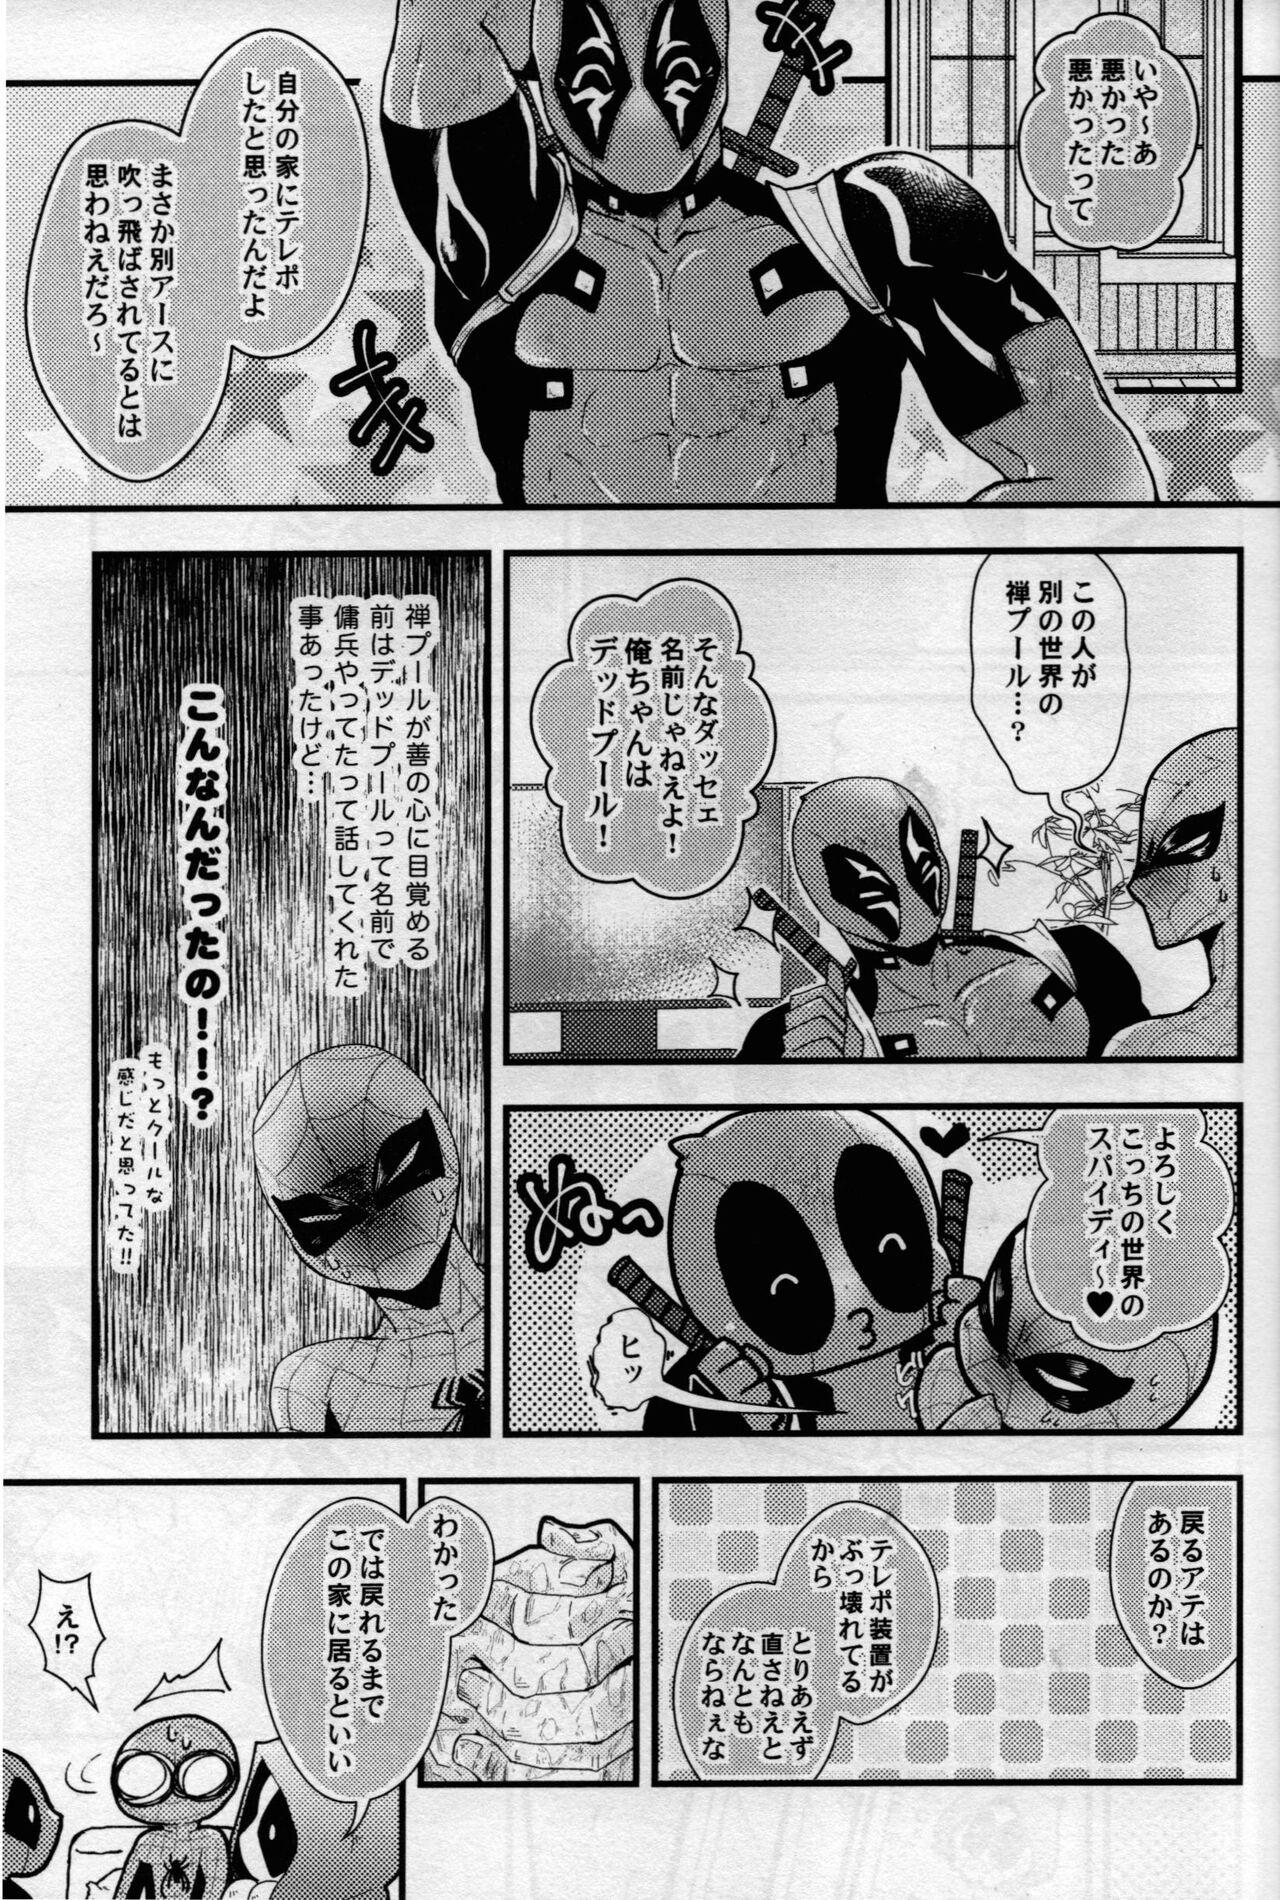 Pegging maruchiba → suraba → zu maruchibasurabazu - Spider-man Sexy Whores - Page 6